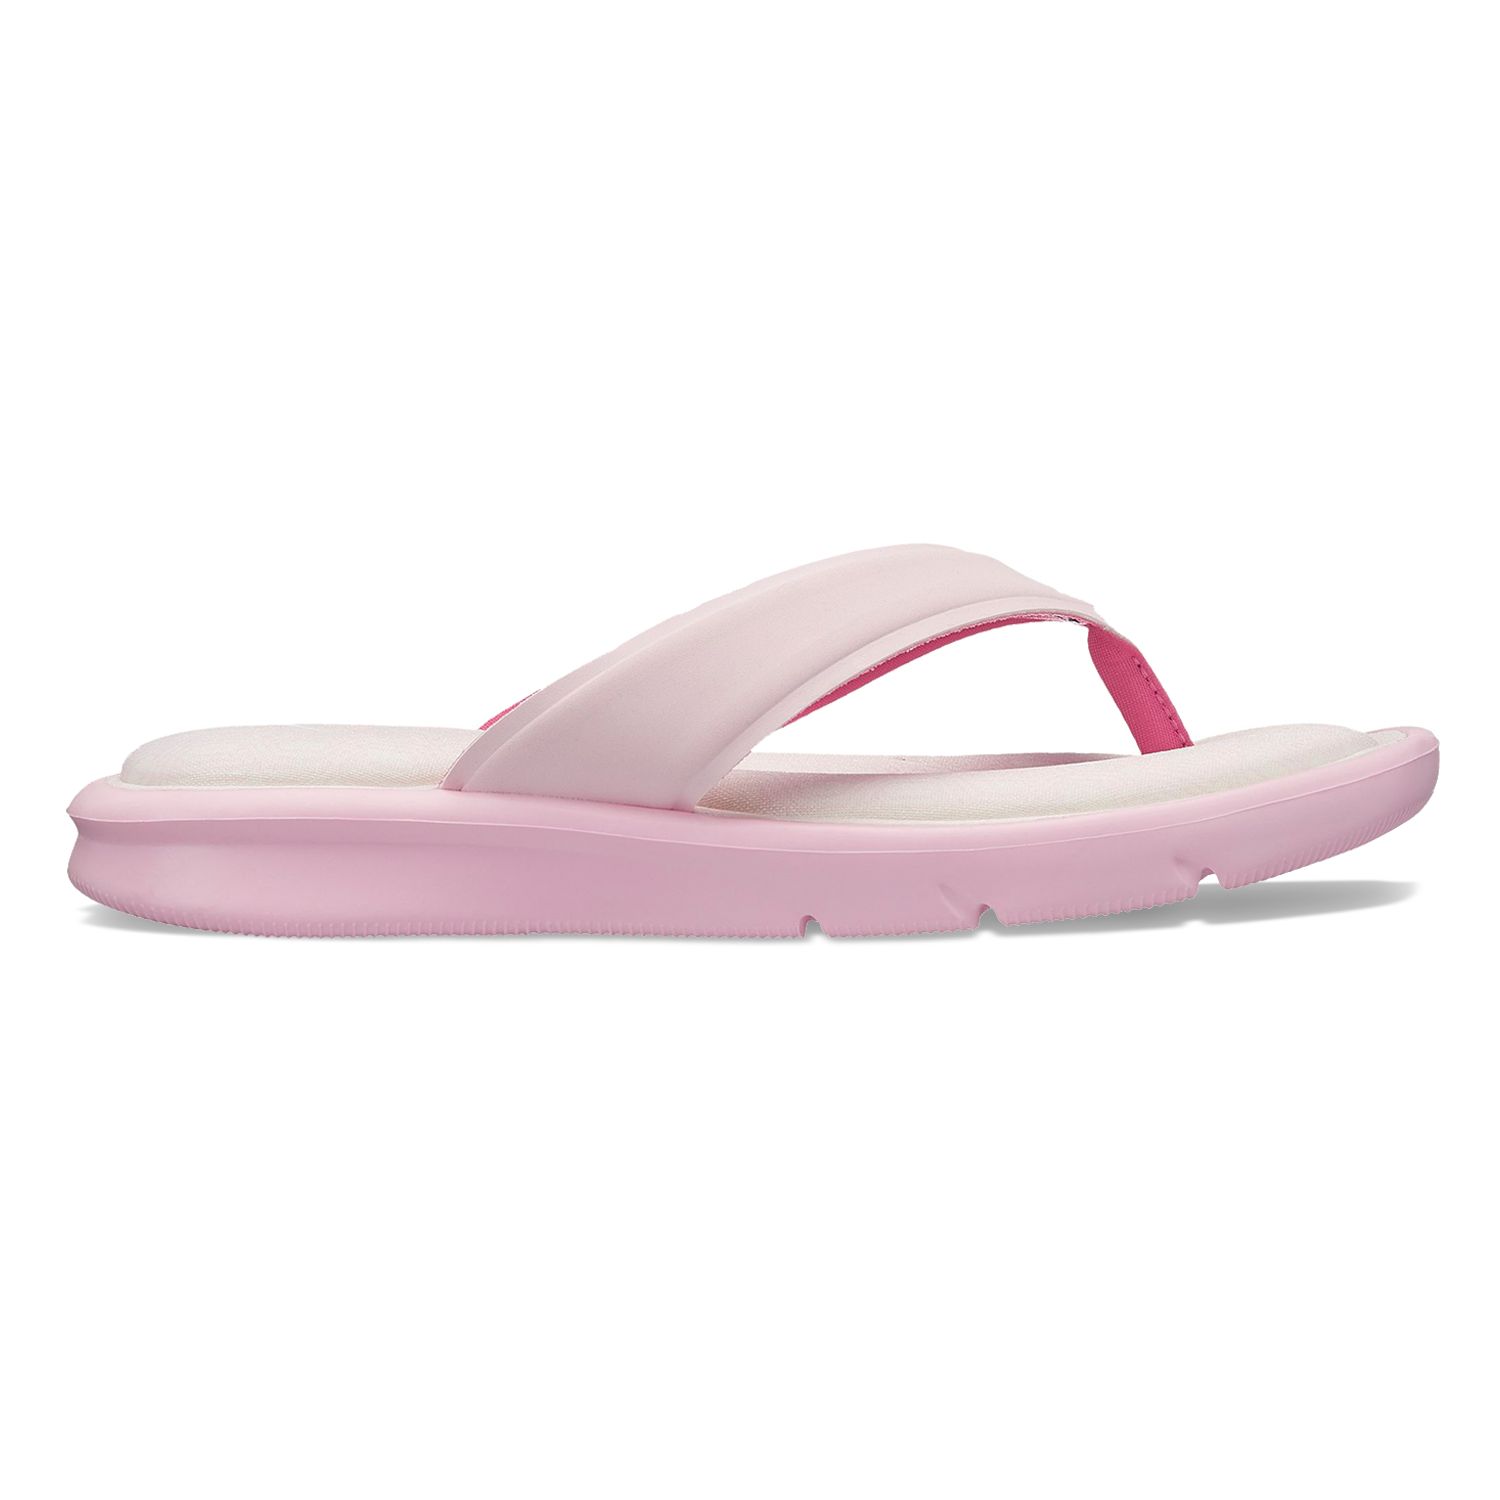 nike women's comfort flip flop sandal